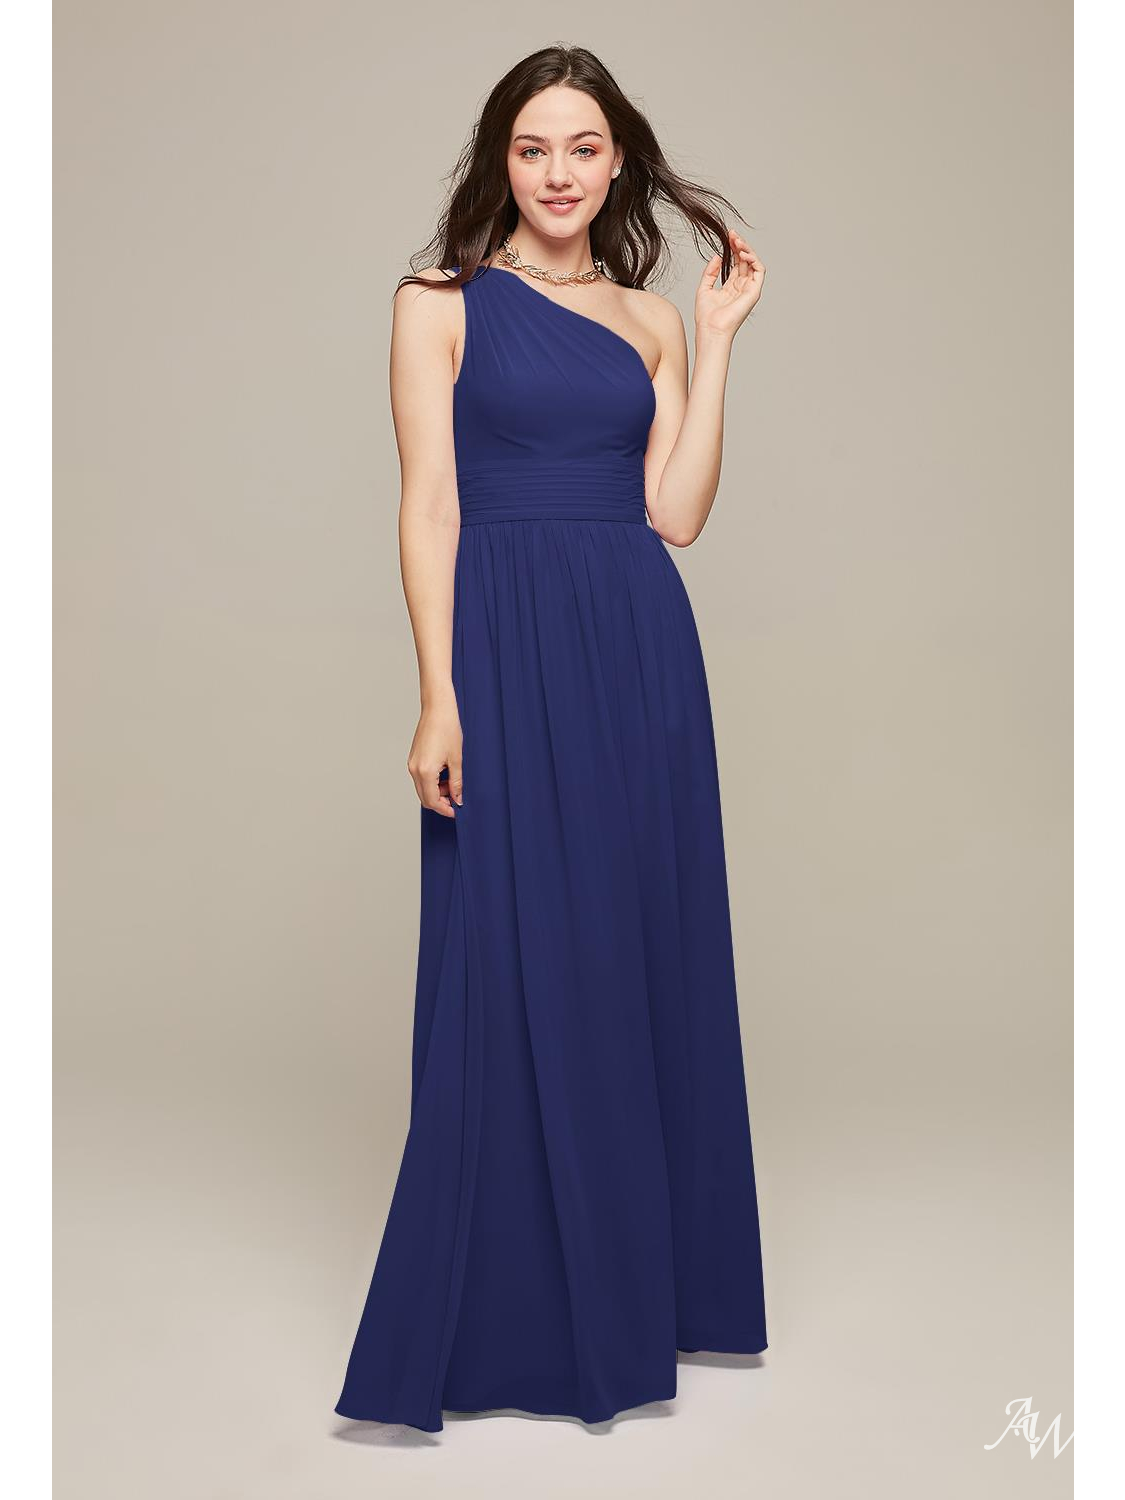 AW Alexis Dress, Royal Blue Long Bridesmaid Dresses, 99.99 | AW Bridal